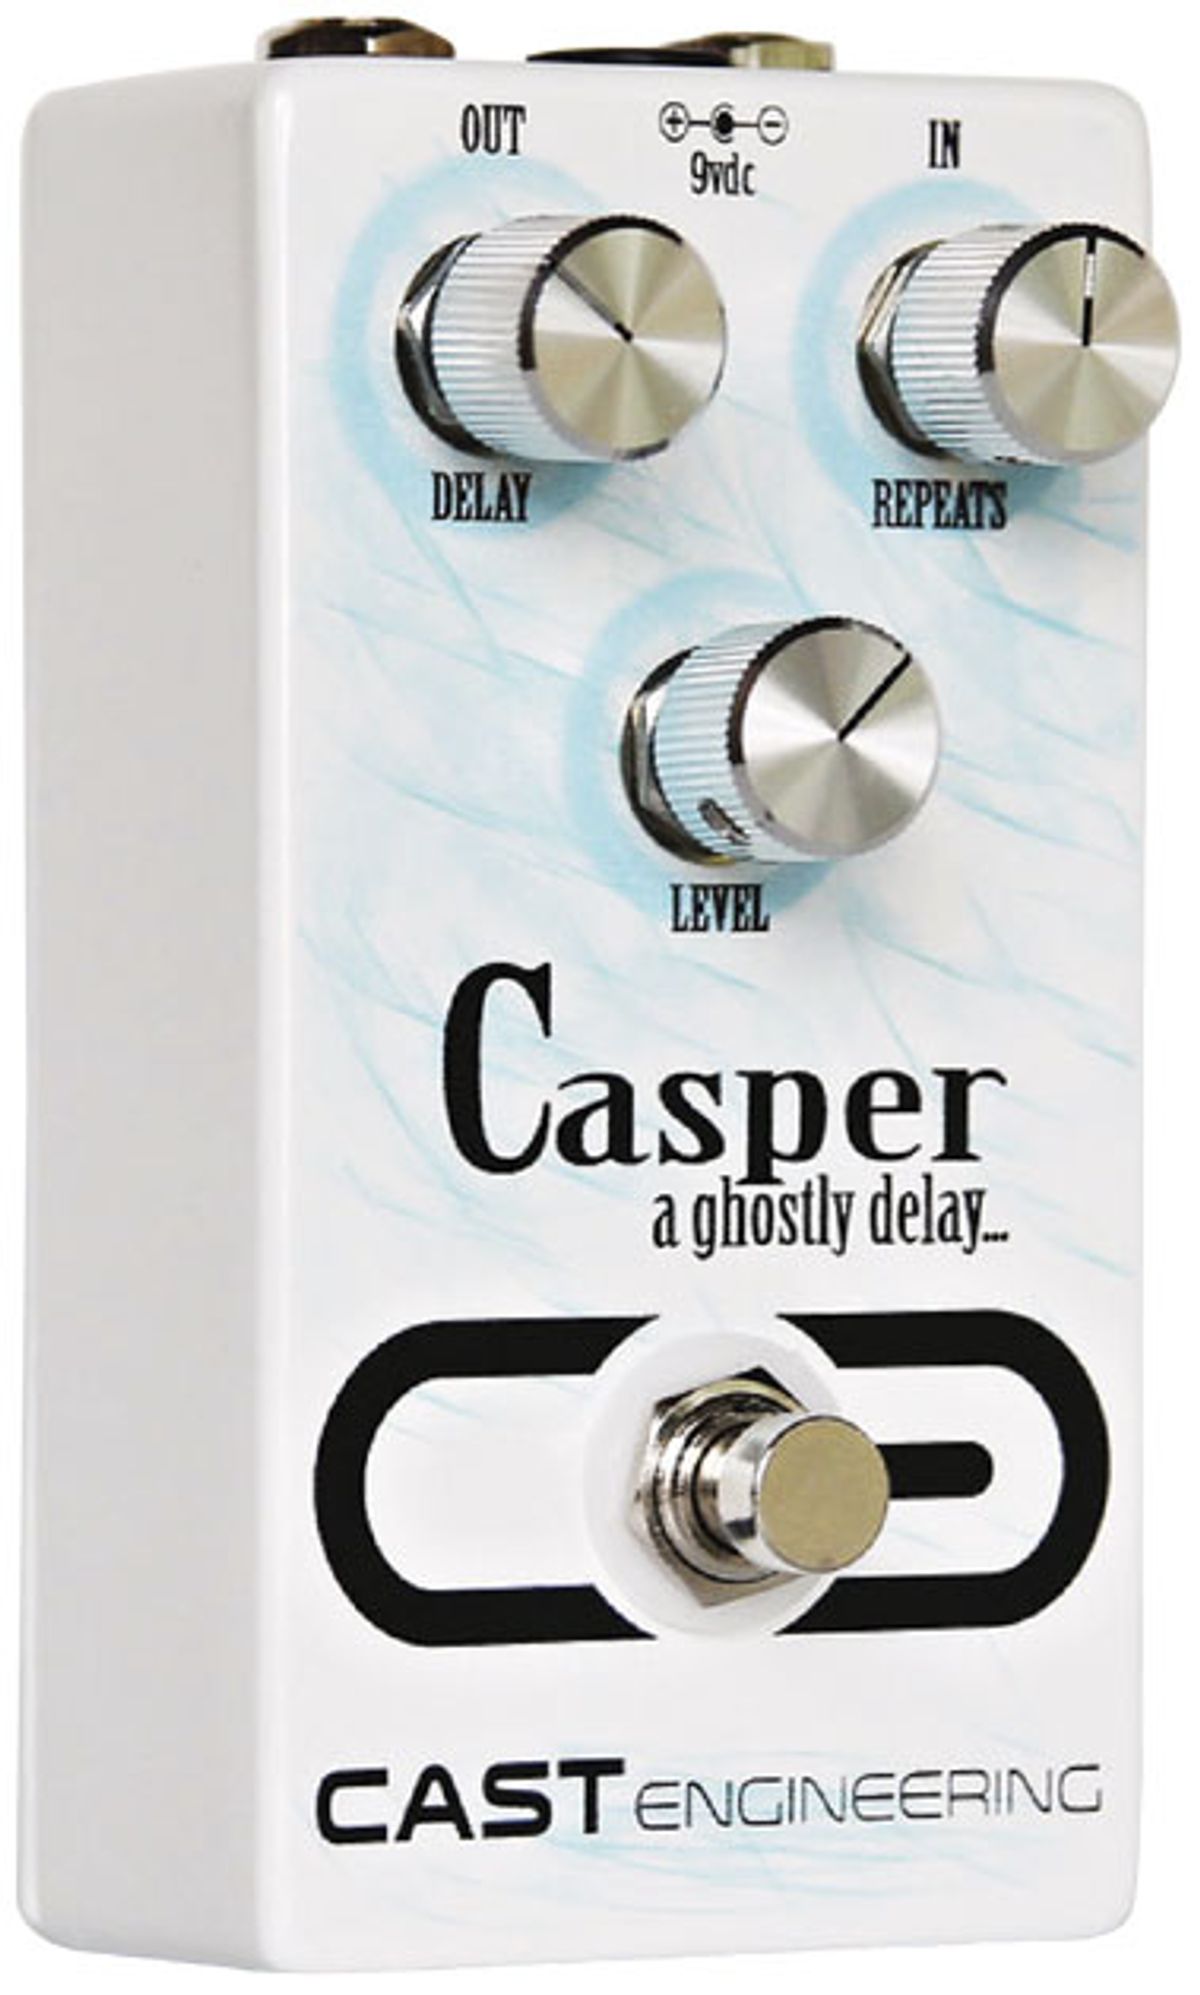 CAST Engineering Casper Delay Review